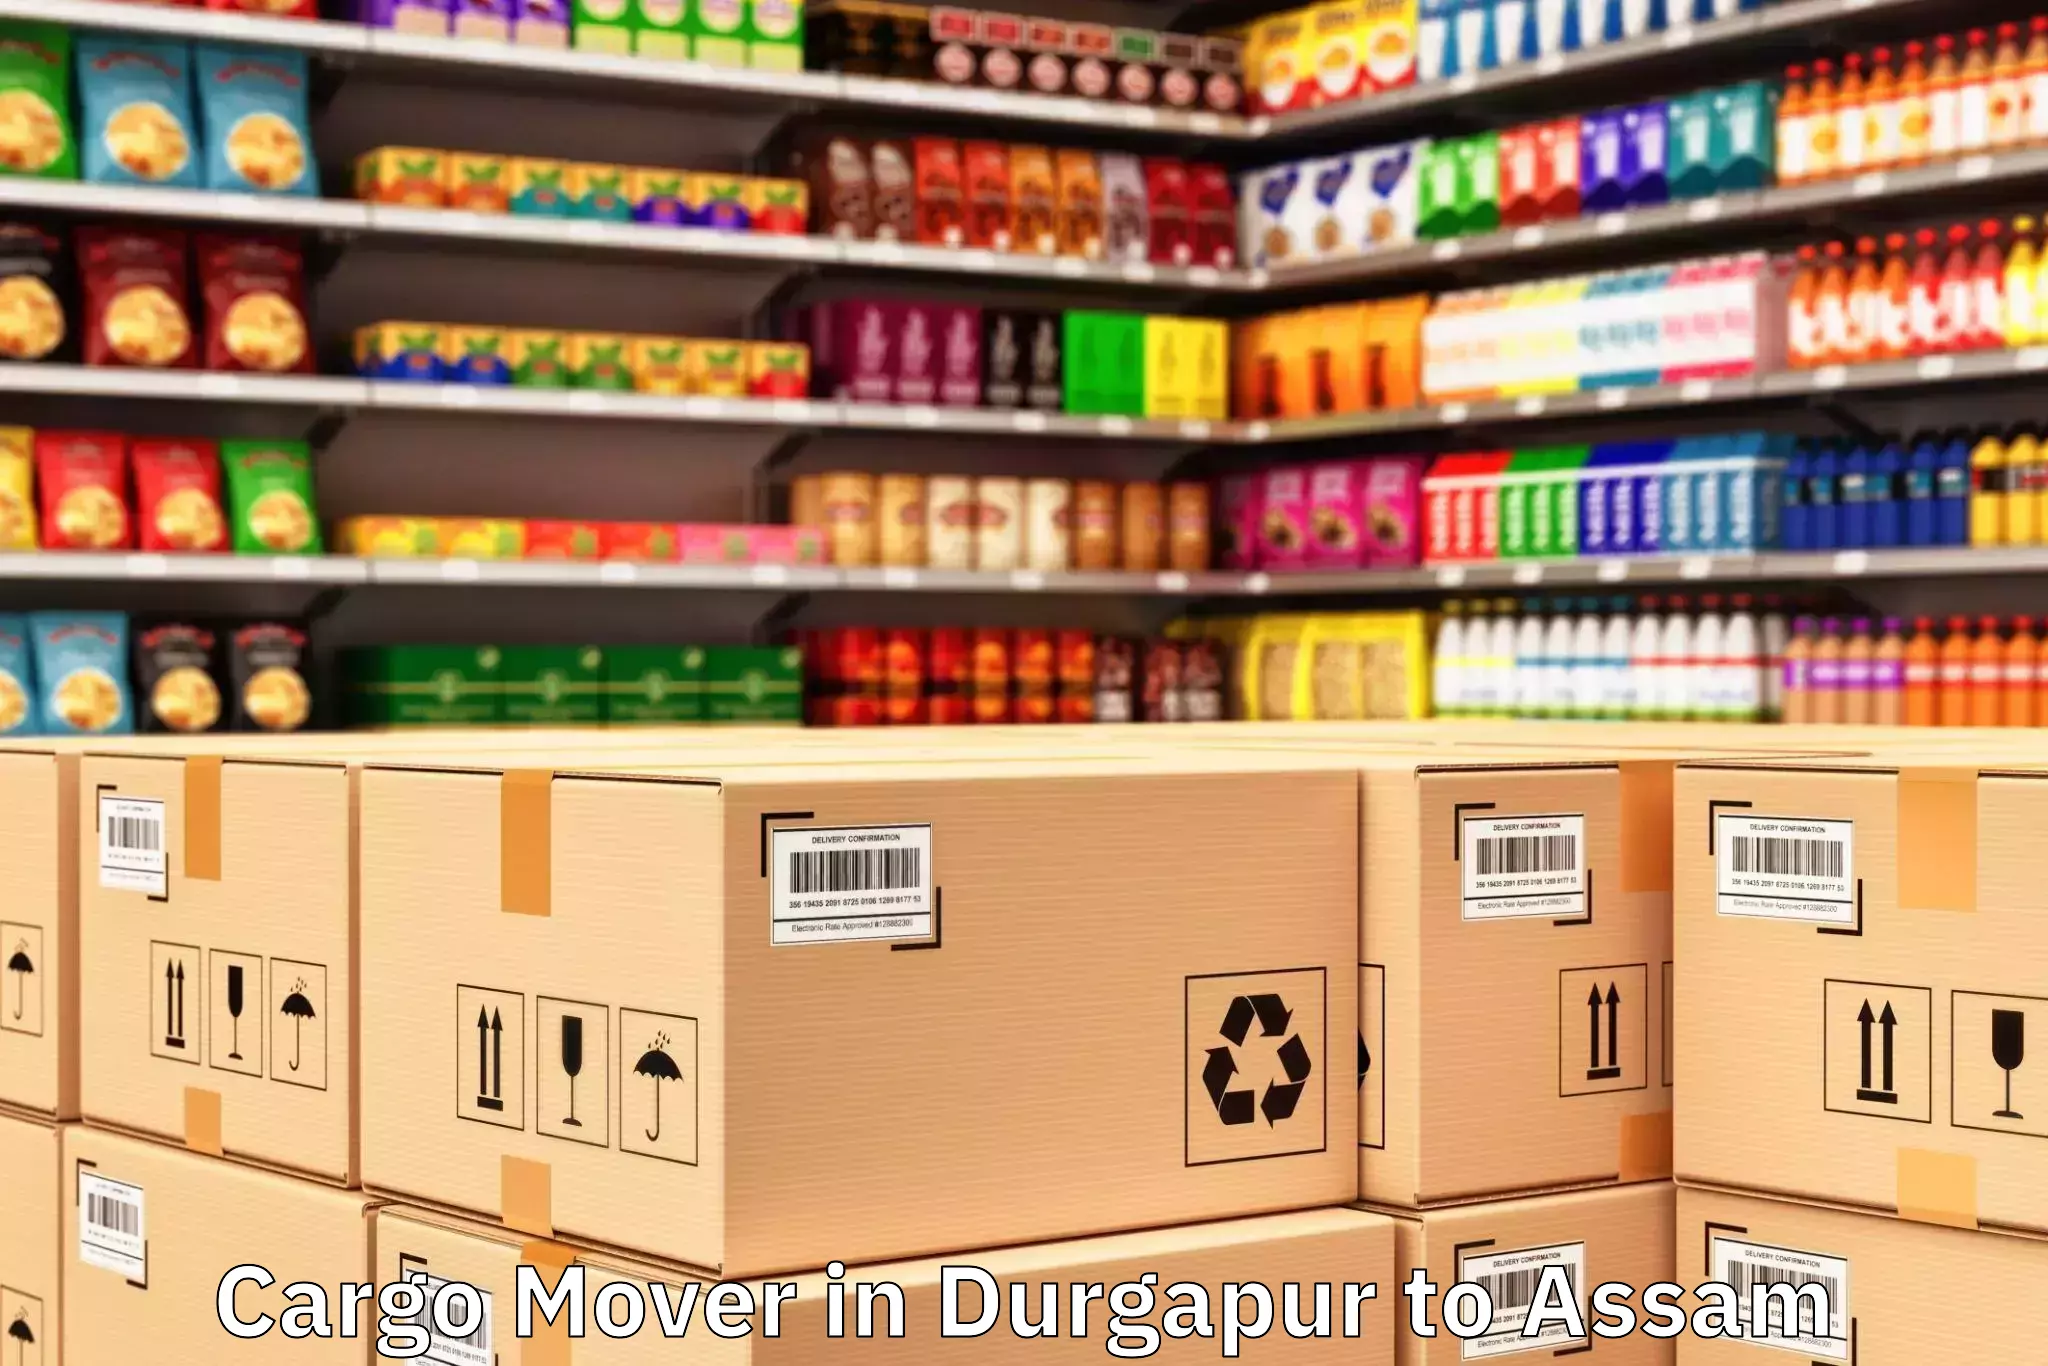 Efficient Durgapur to Jorhat Cargo Mover